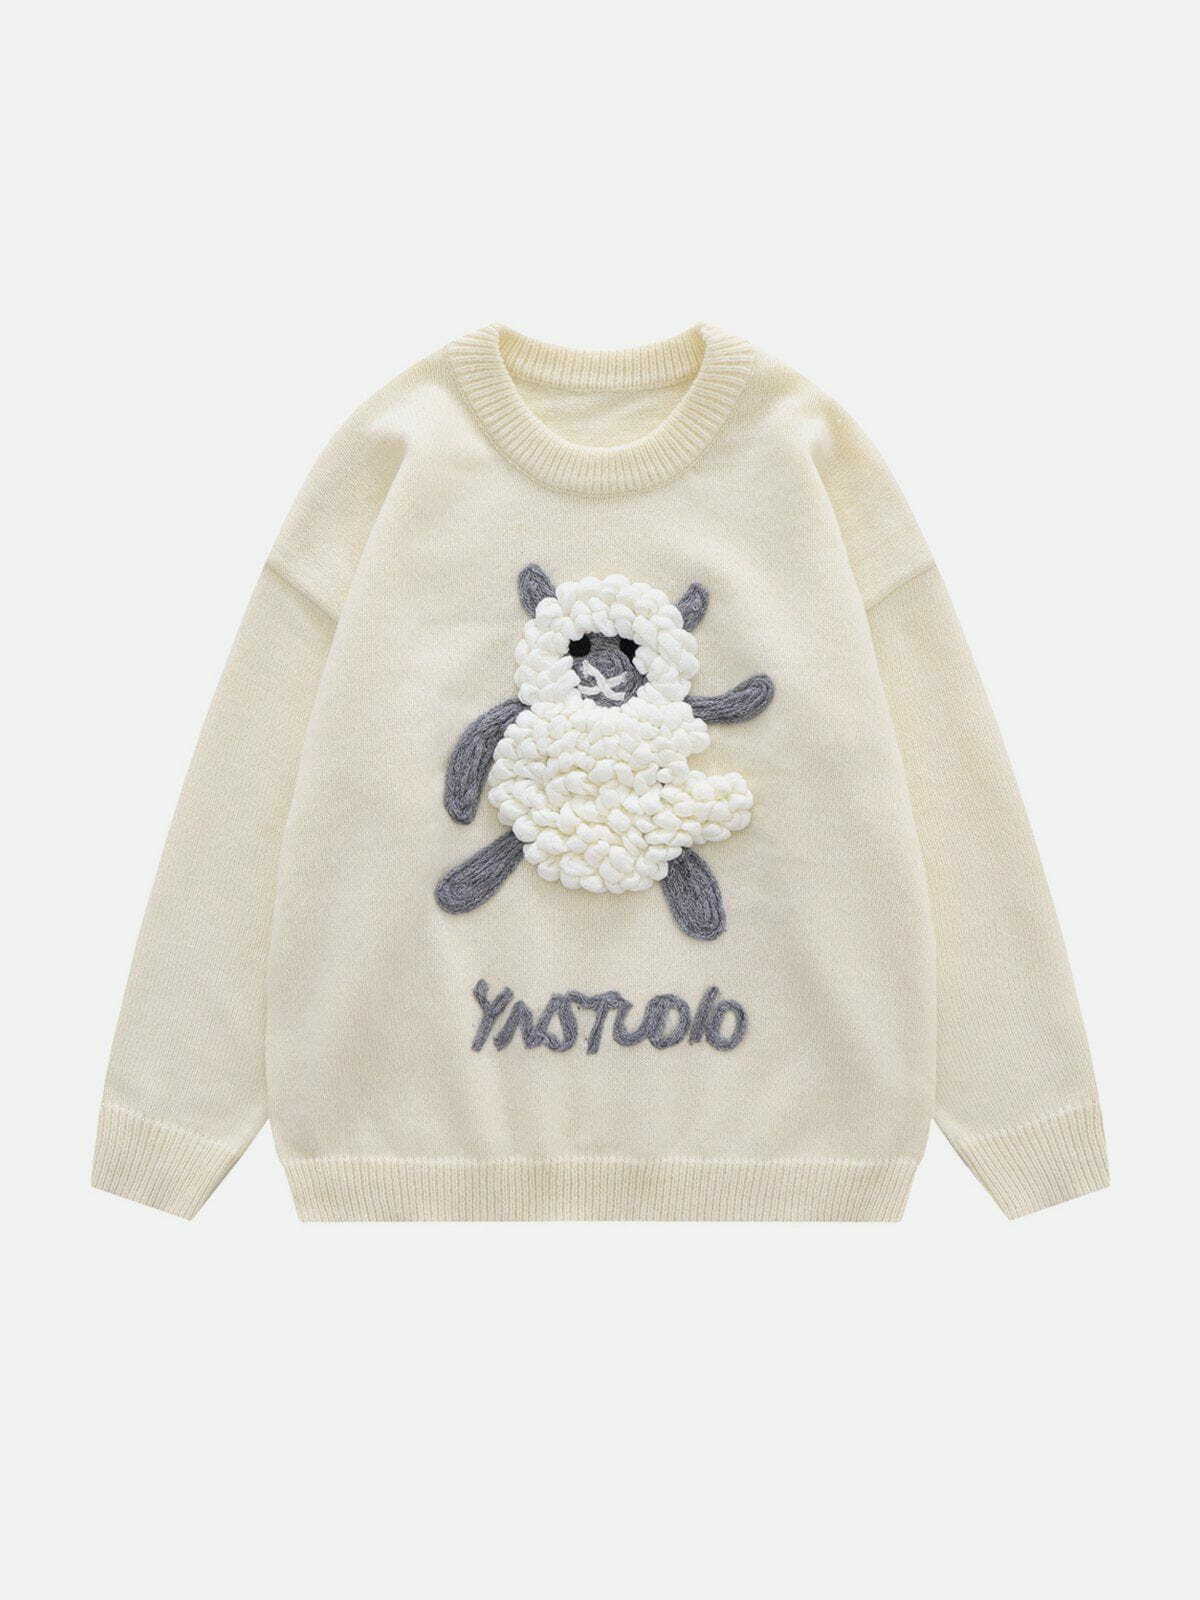 plush lamb print sweater cozy & quirky streetwear 1157